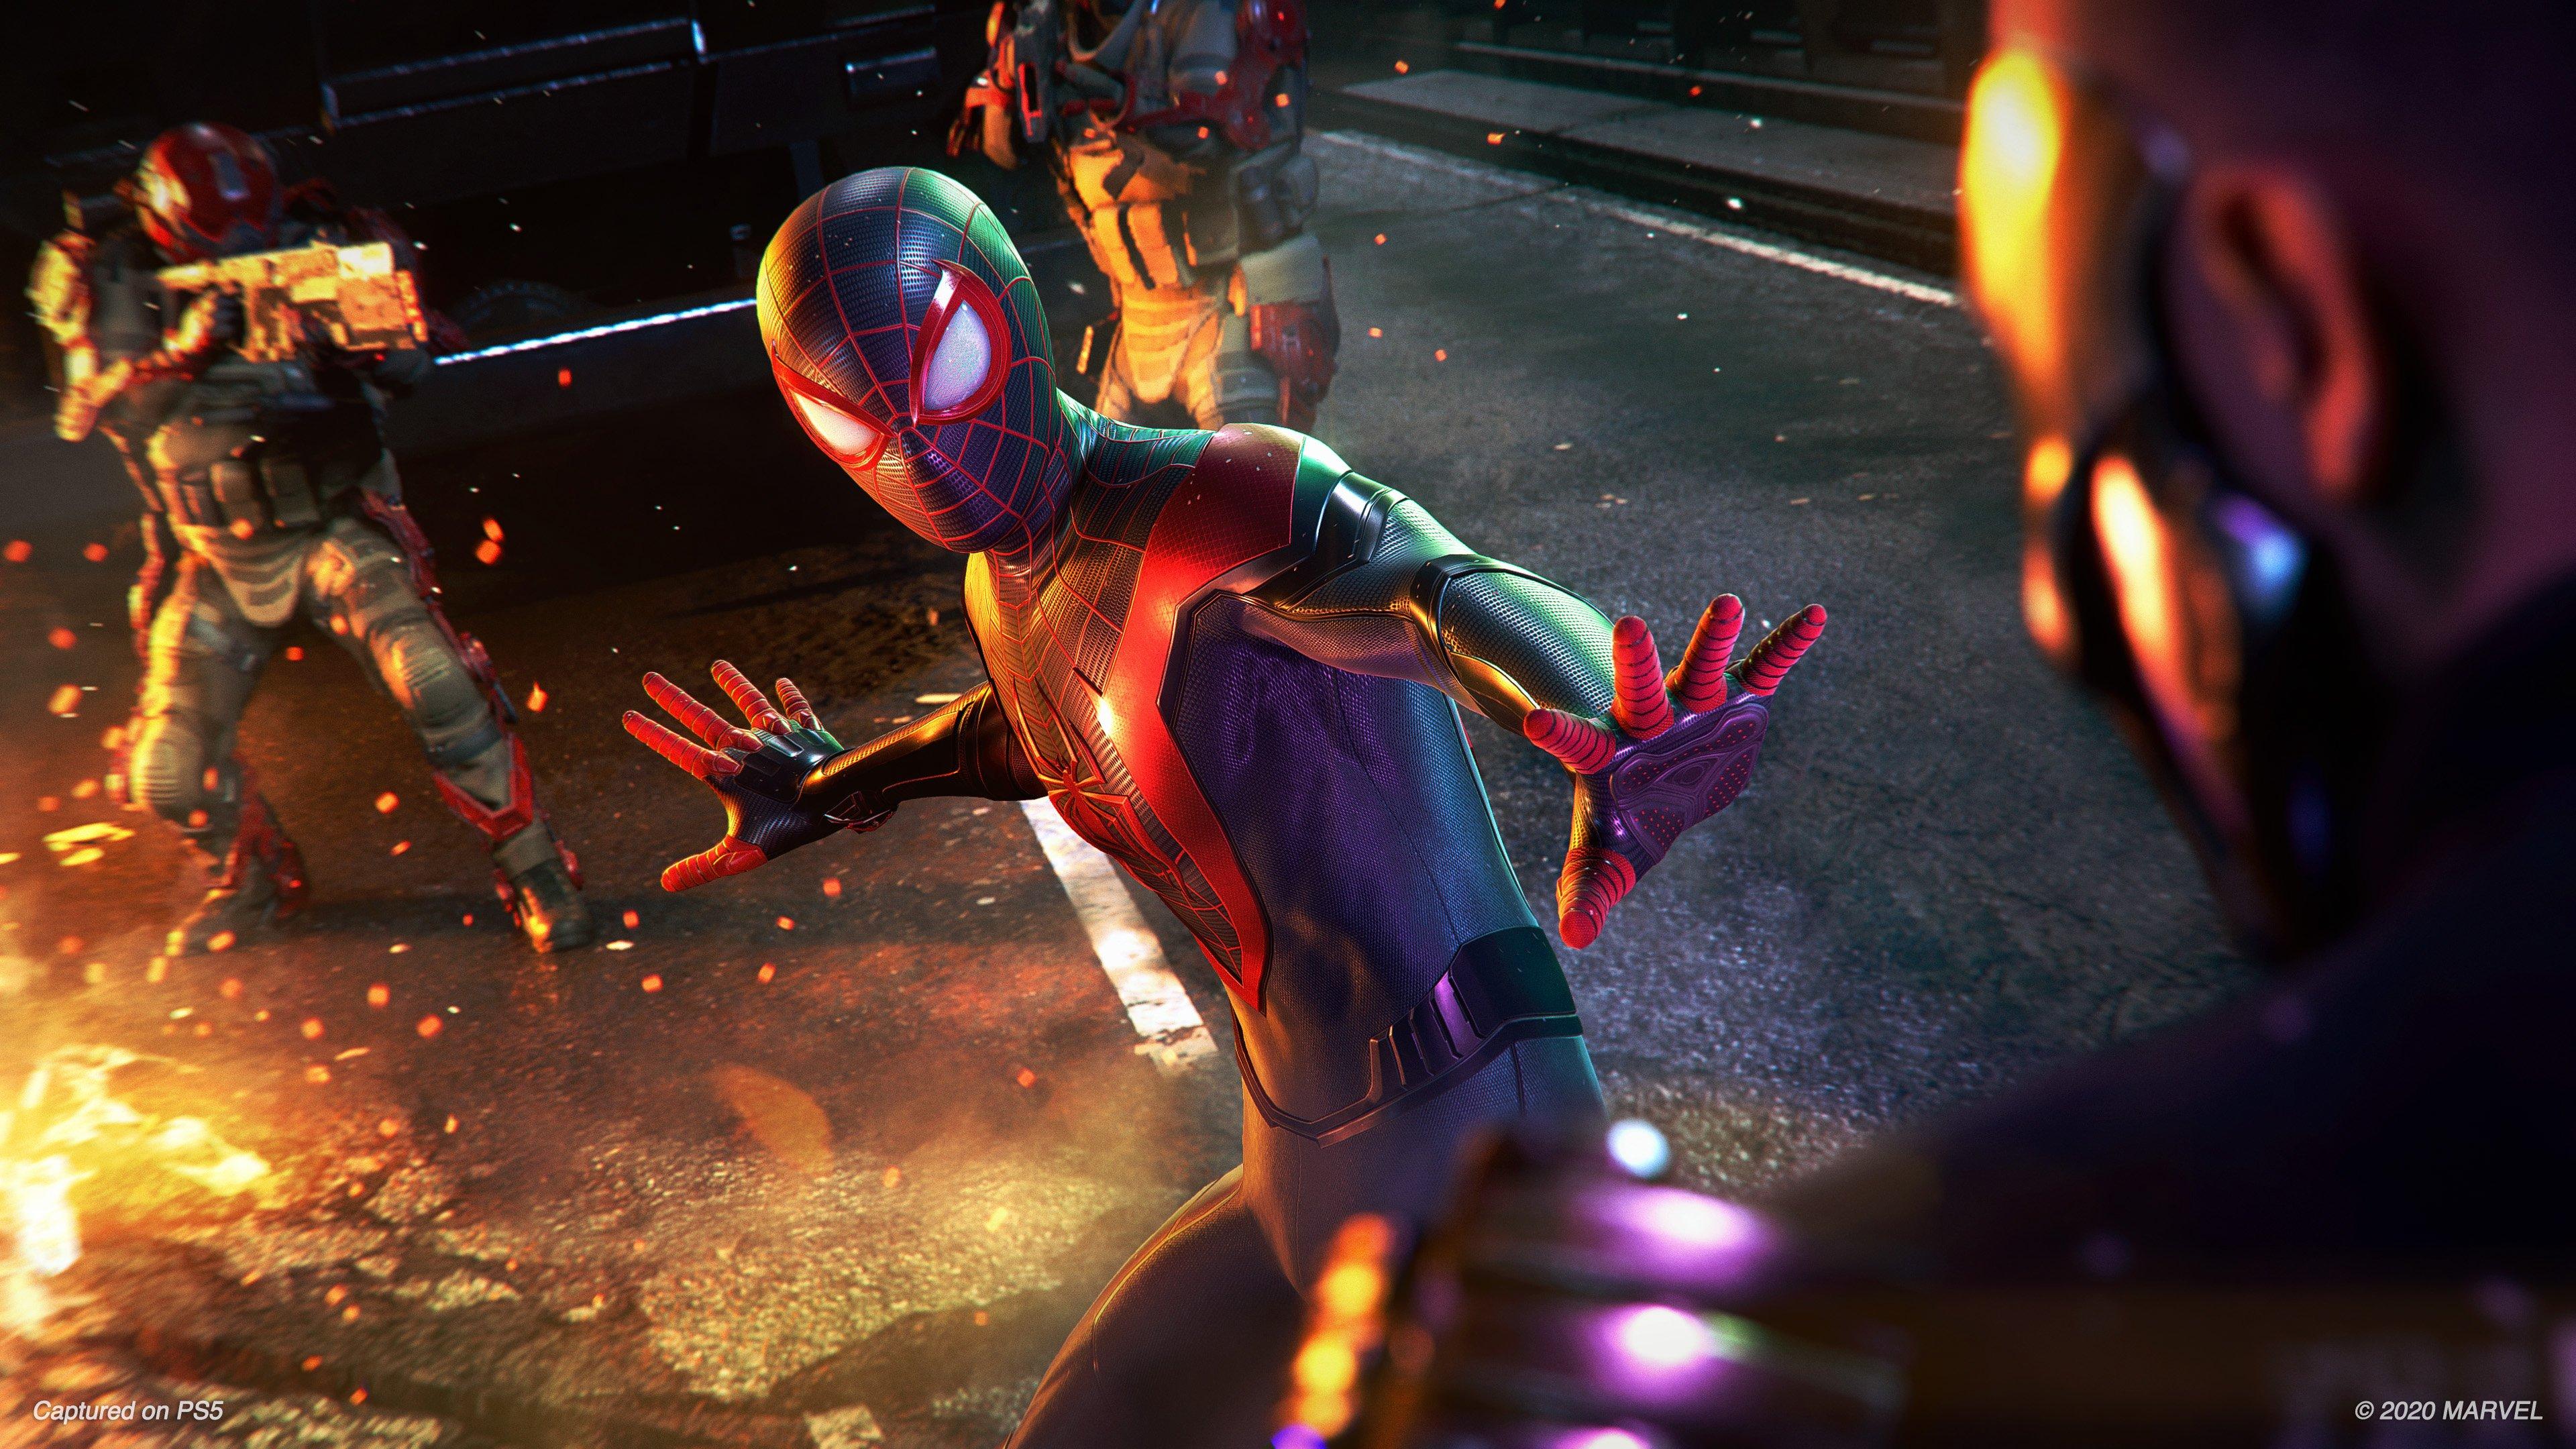 Marvels Spider-Man Miles Morales Pc Steam Offline - Loja DrexGames - A sua  Loja De Games